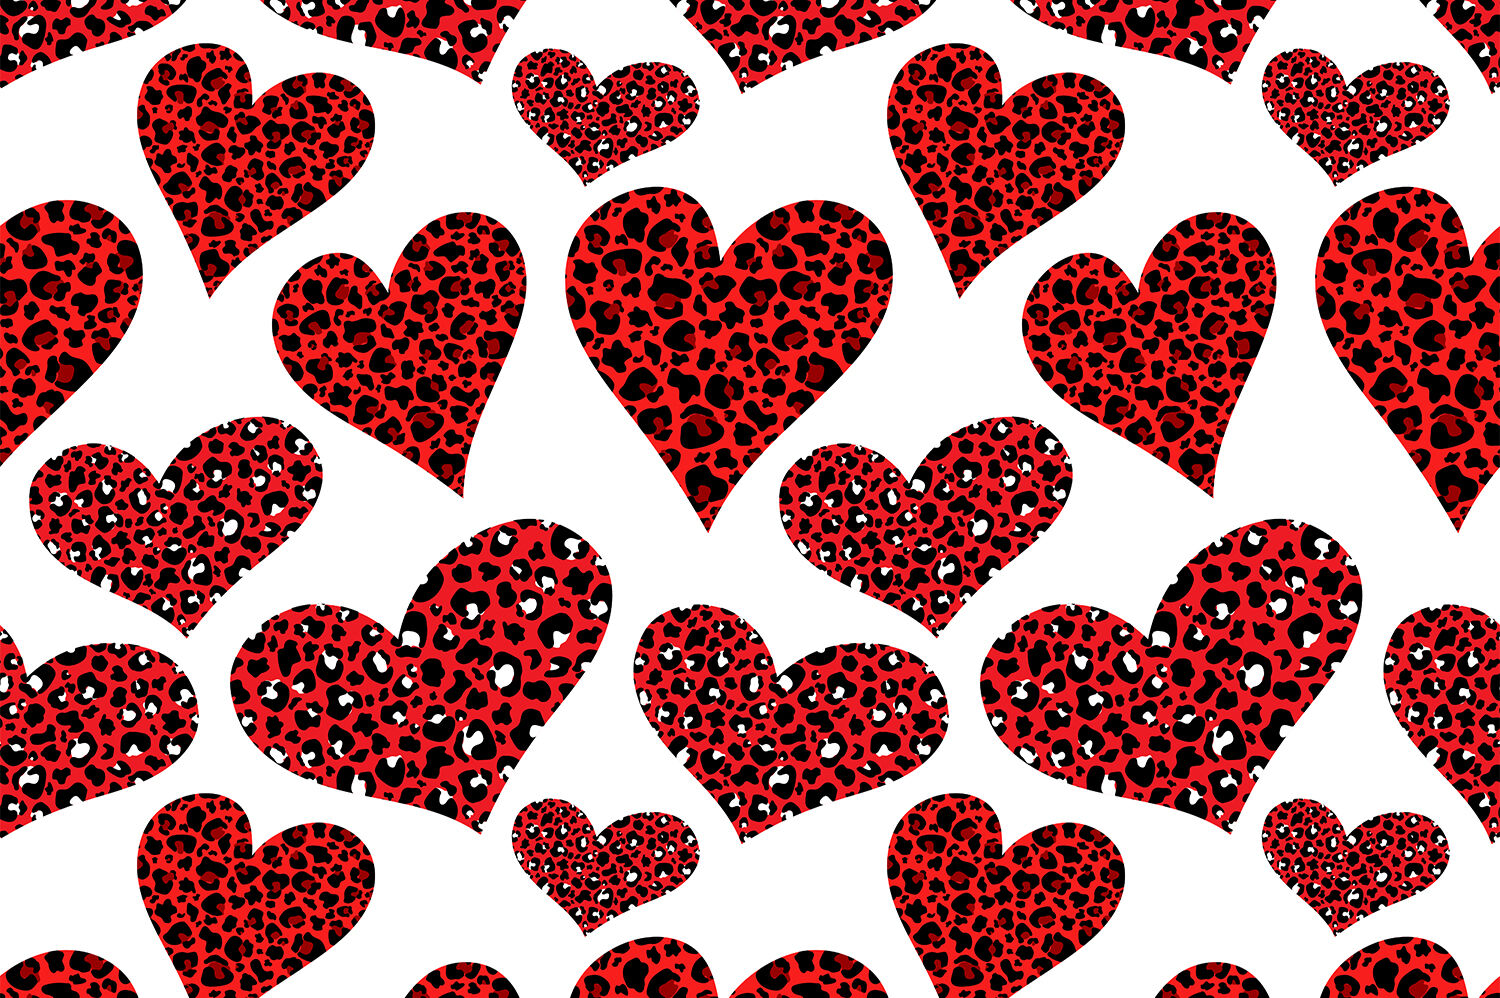 Leopard hearts pattern. Animal print pattern. Hearts SVG By